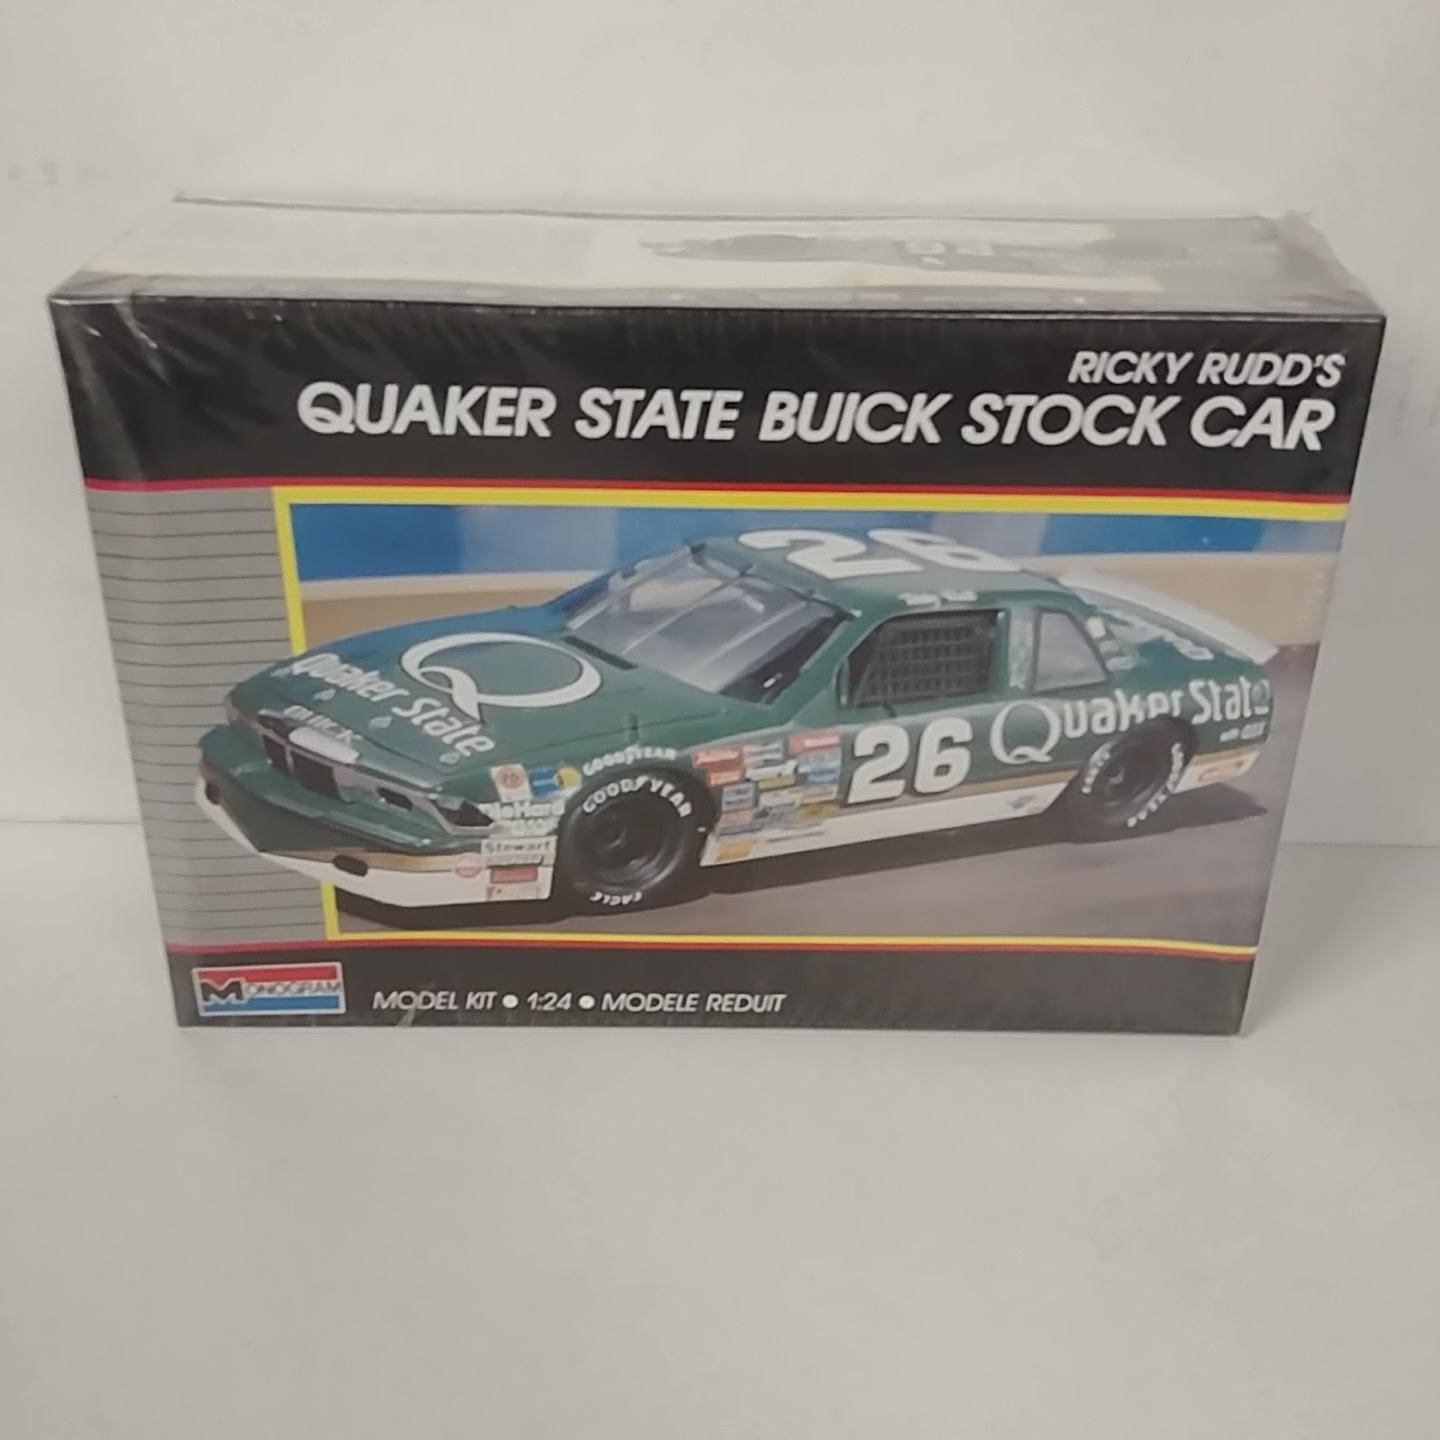 1989 Ricky Rudd 1/24th Quaker State Buick model kit by Monogram